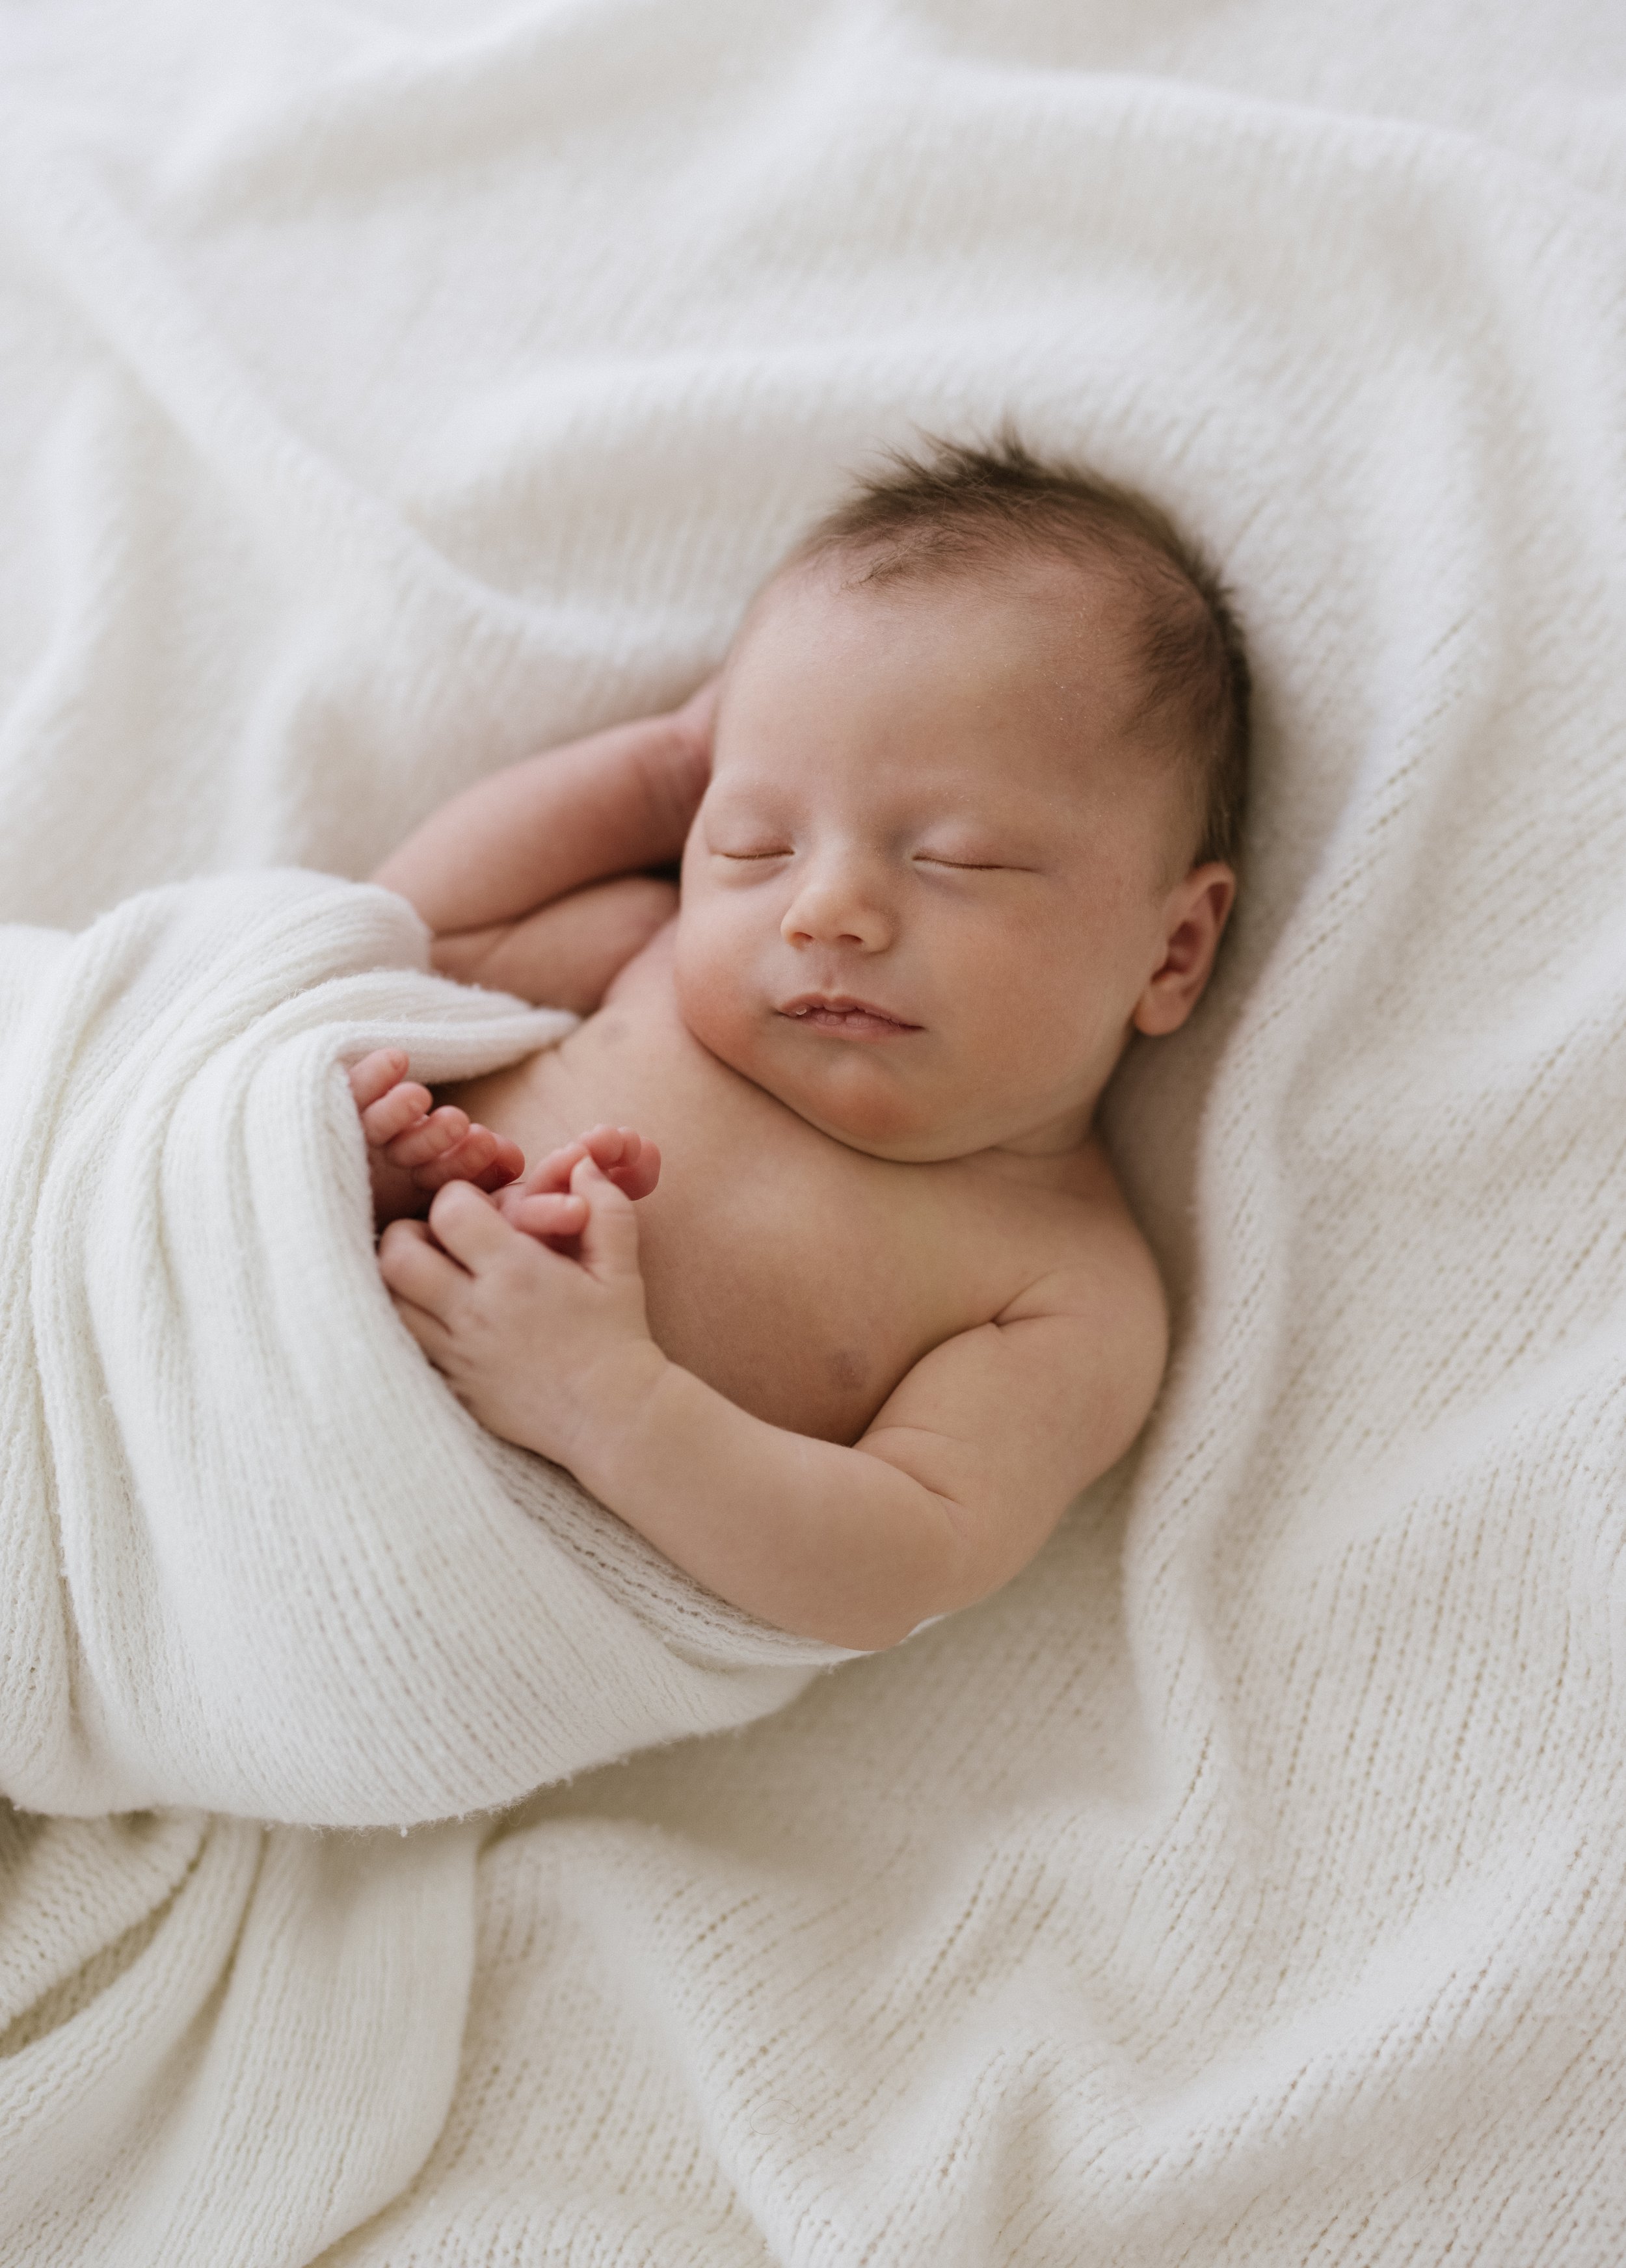 Brisbane newborn baby curled up in a soft white blanket 